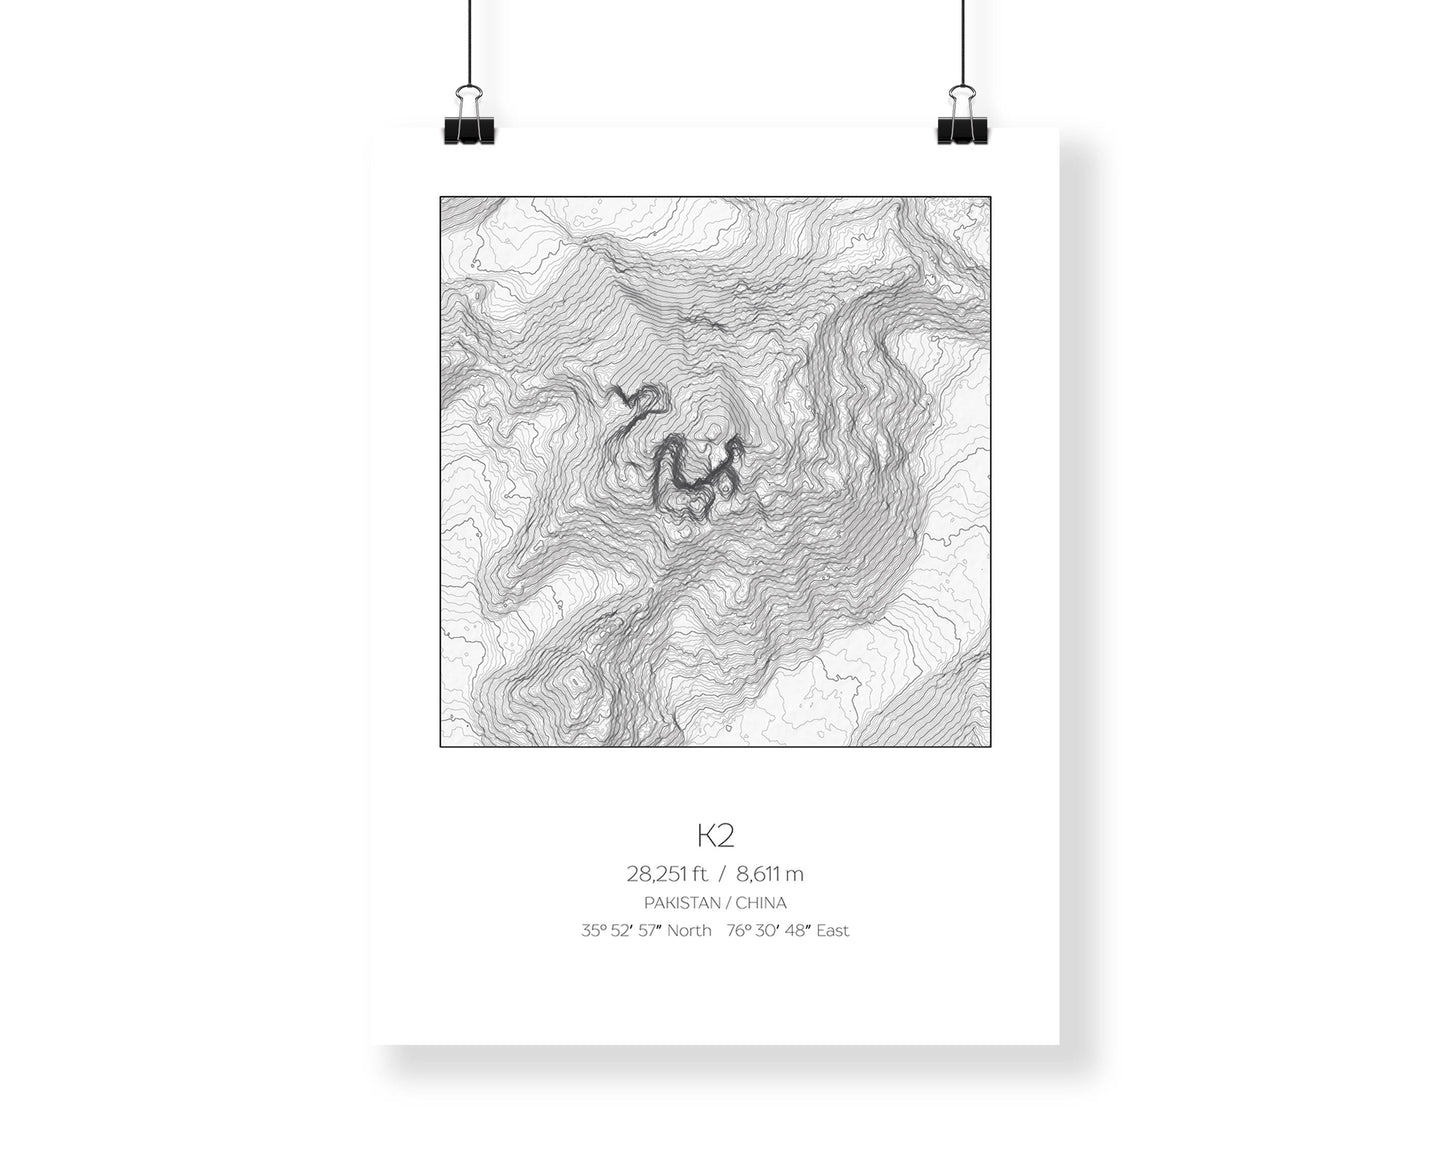 K2, Pakistan China Topography Elevation Print Wall Art